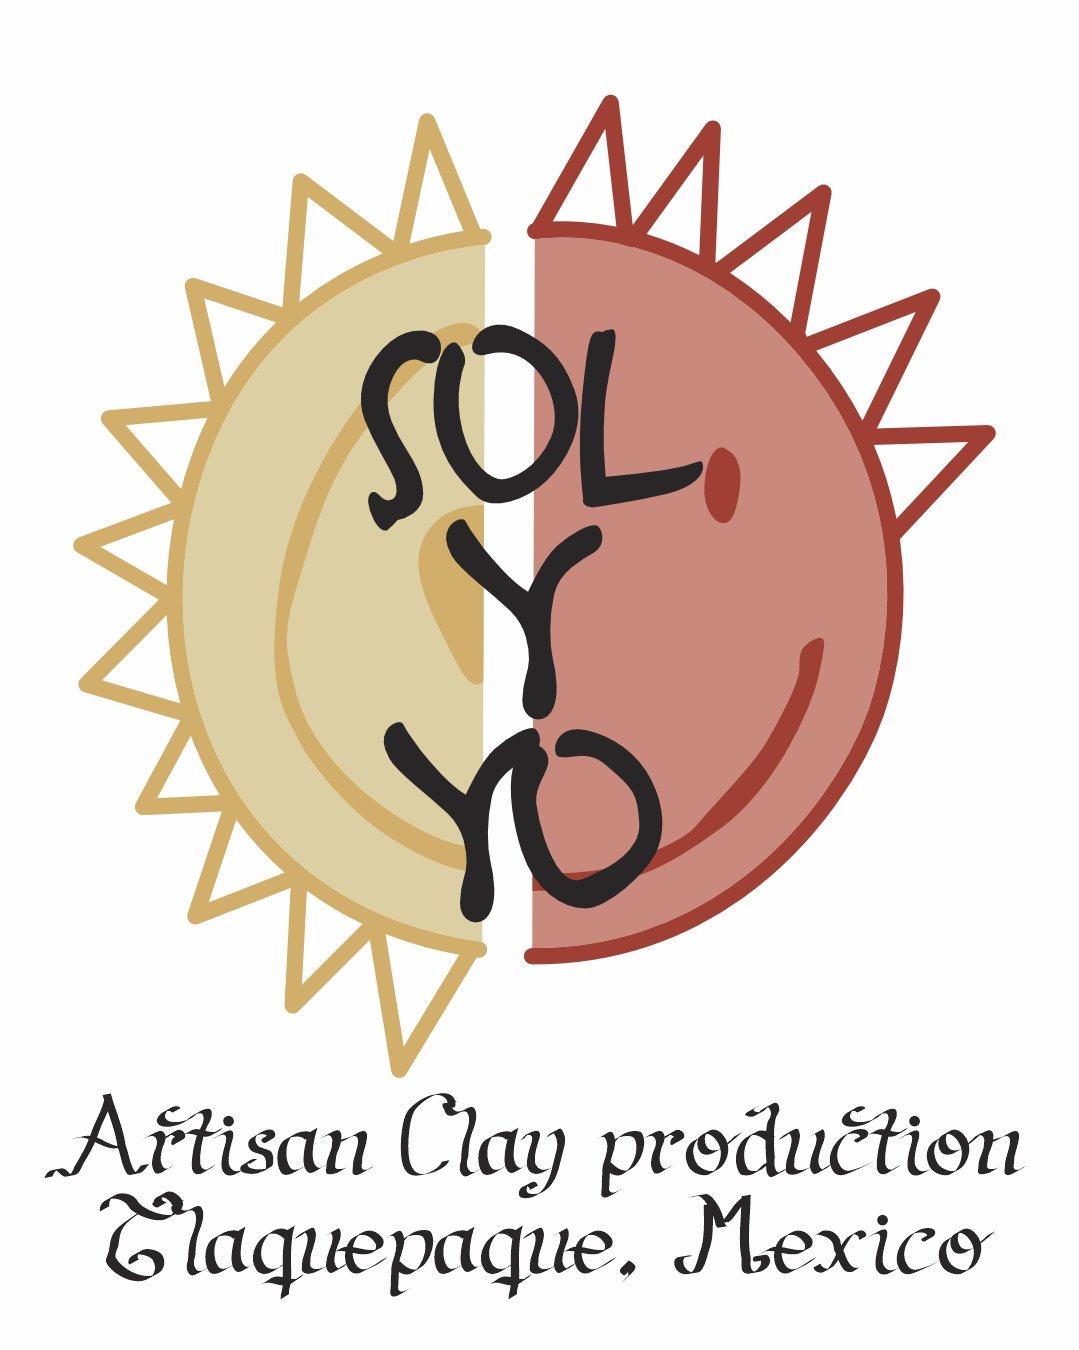 Sol-y-Yo association of artisans